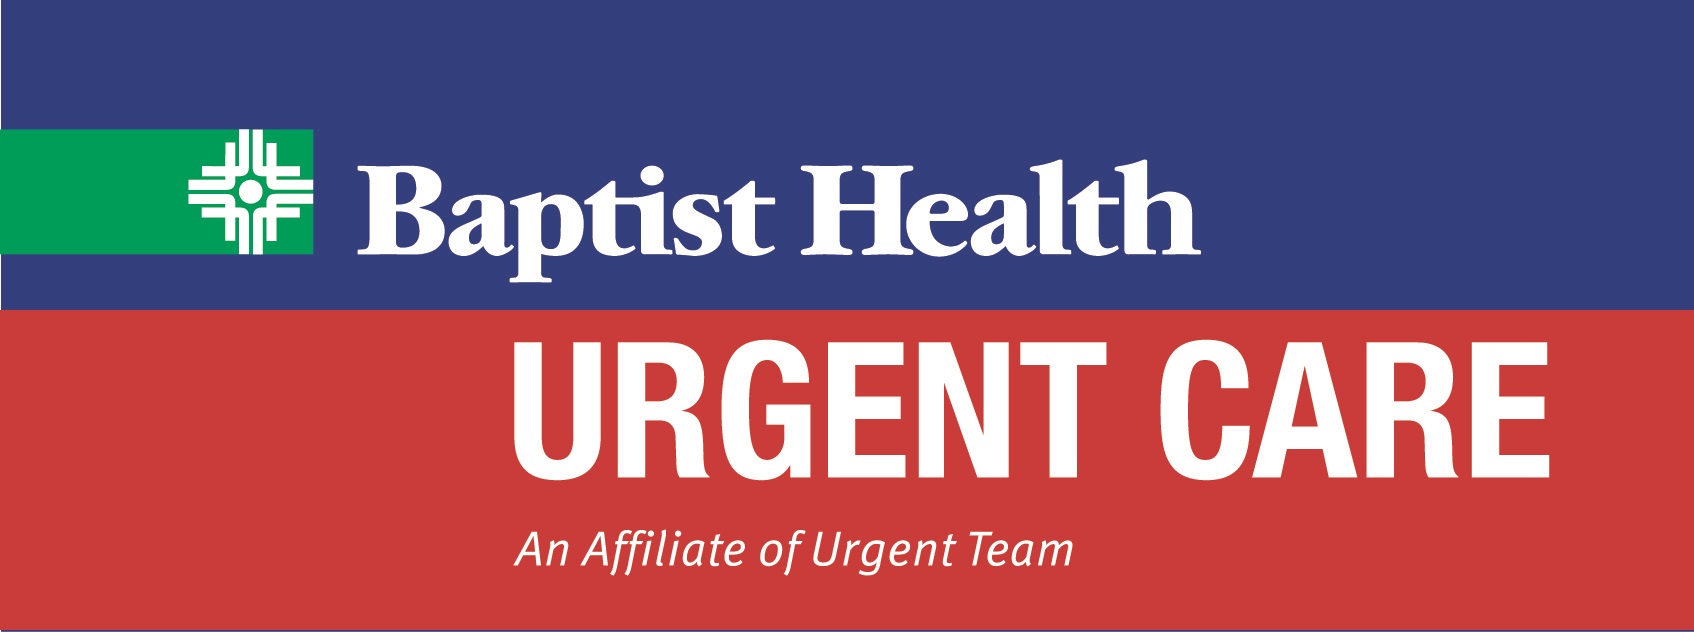 Baptist Health Urgent Care (Virtual Visit) - Telemedicine - BHUC Logo